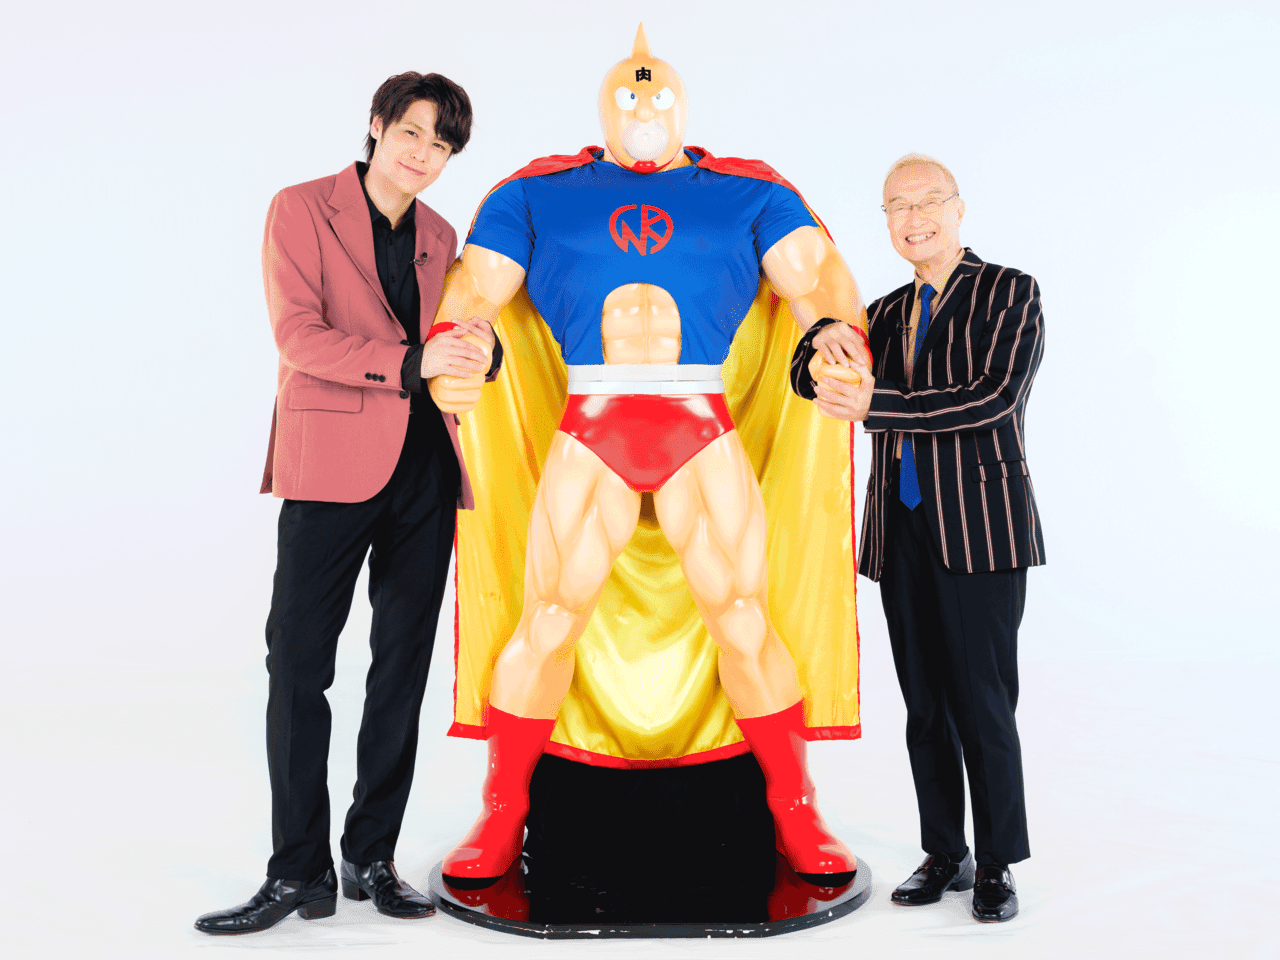 TVアニメ『キン肉マン』完璧超人始祖編のキャスト陣が公開。キン肉マンの声優は宮野真守さんに
_003